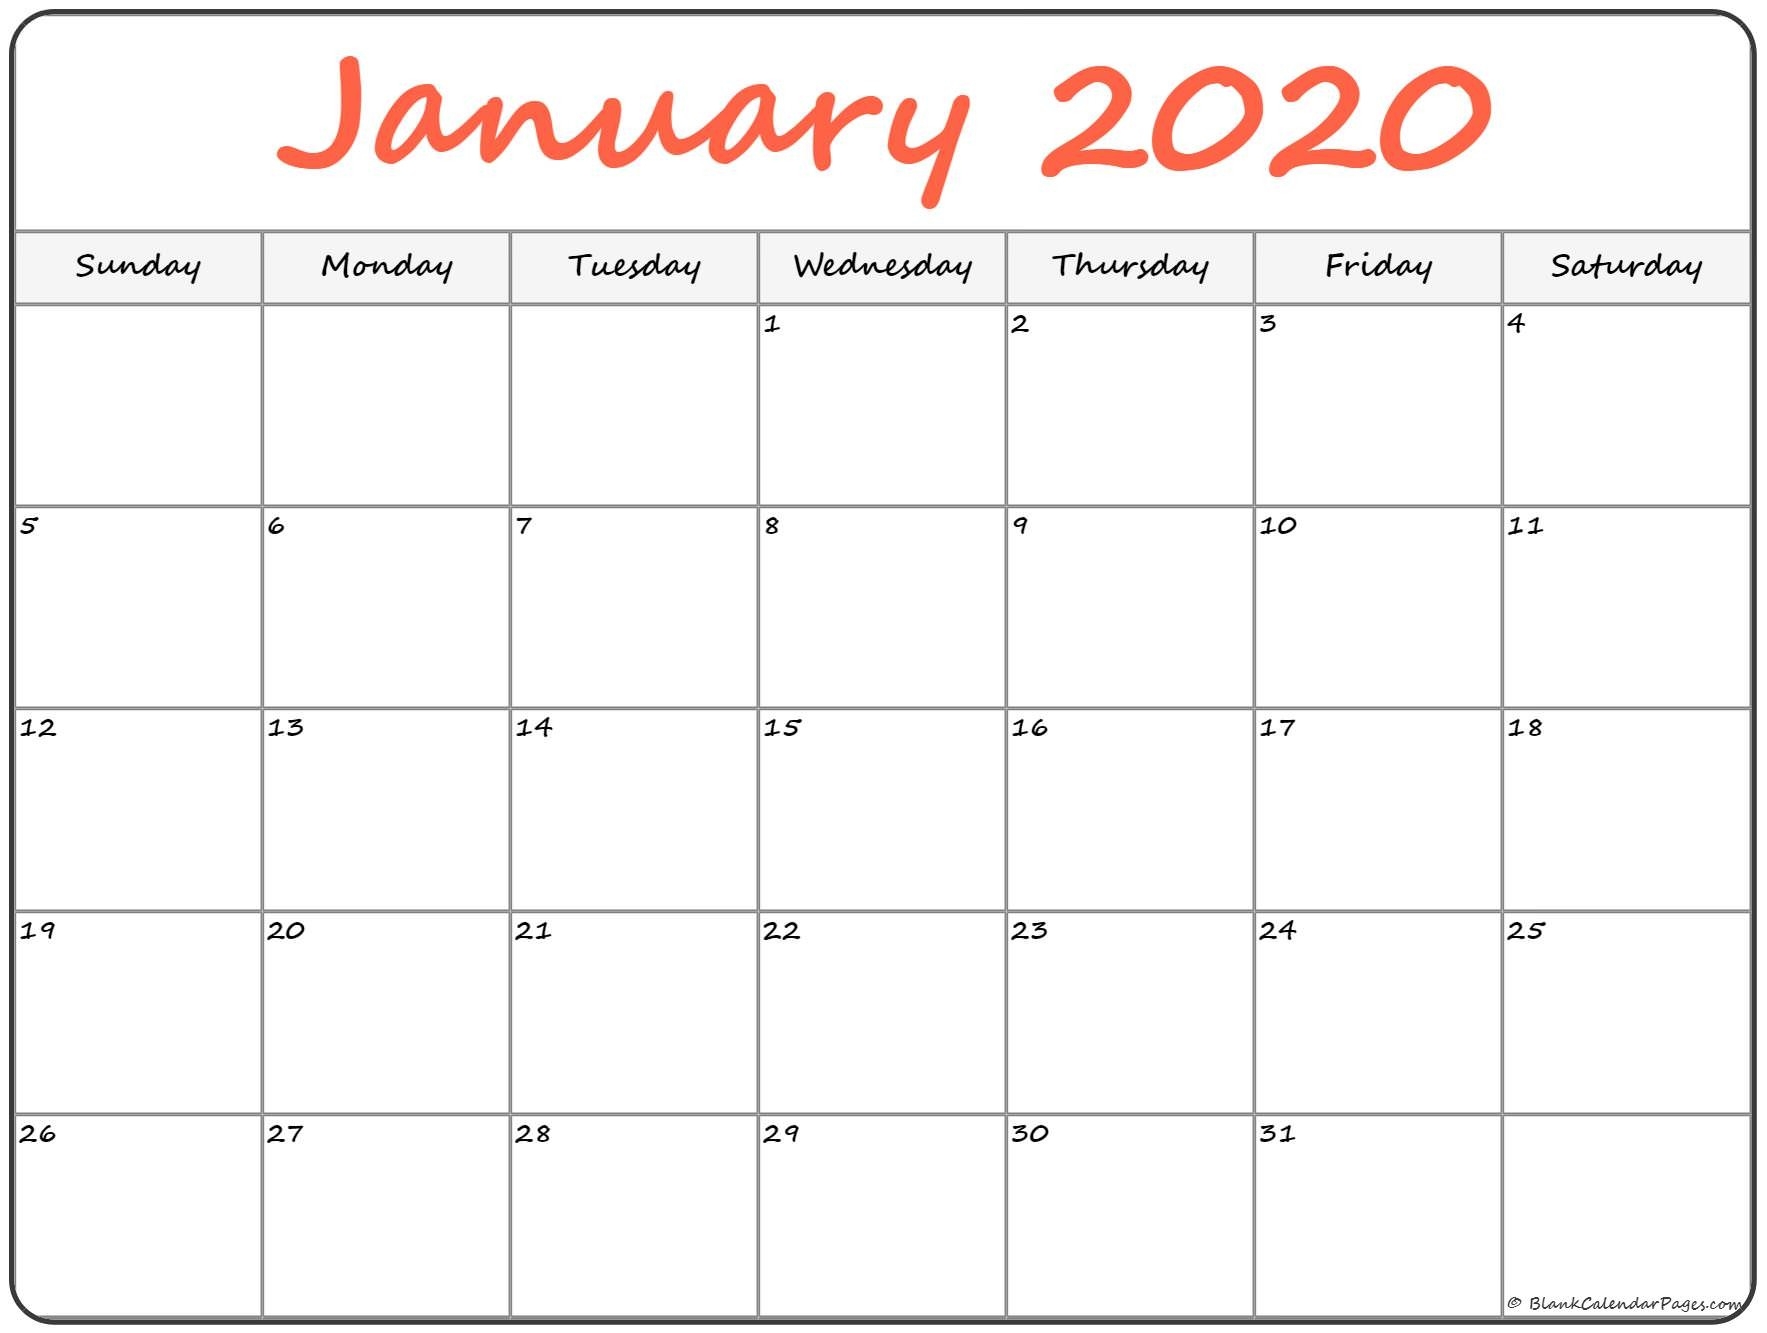 January 2020 Calendar | Free Printable Monthly Calendars-Cute January 2020 Calendar